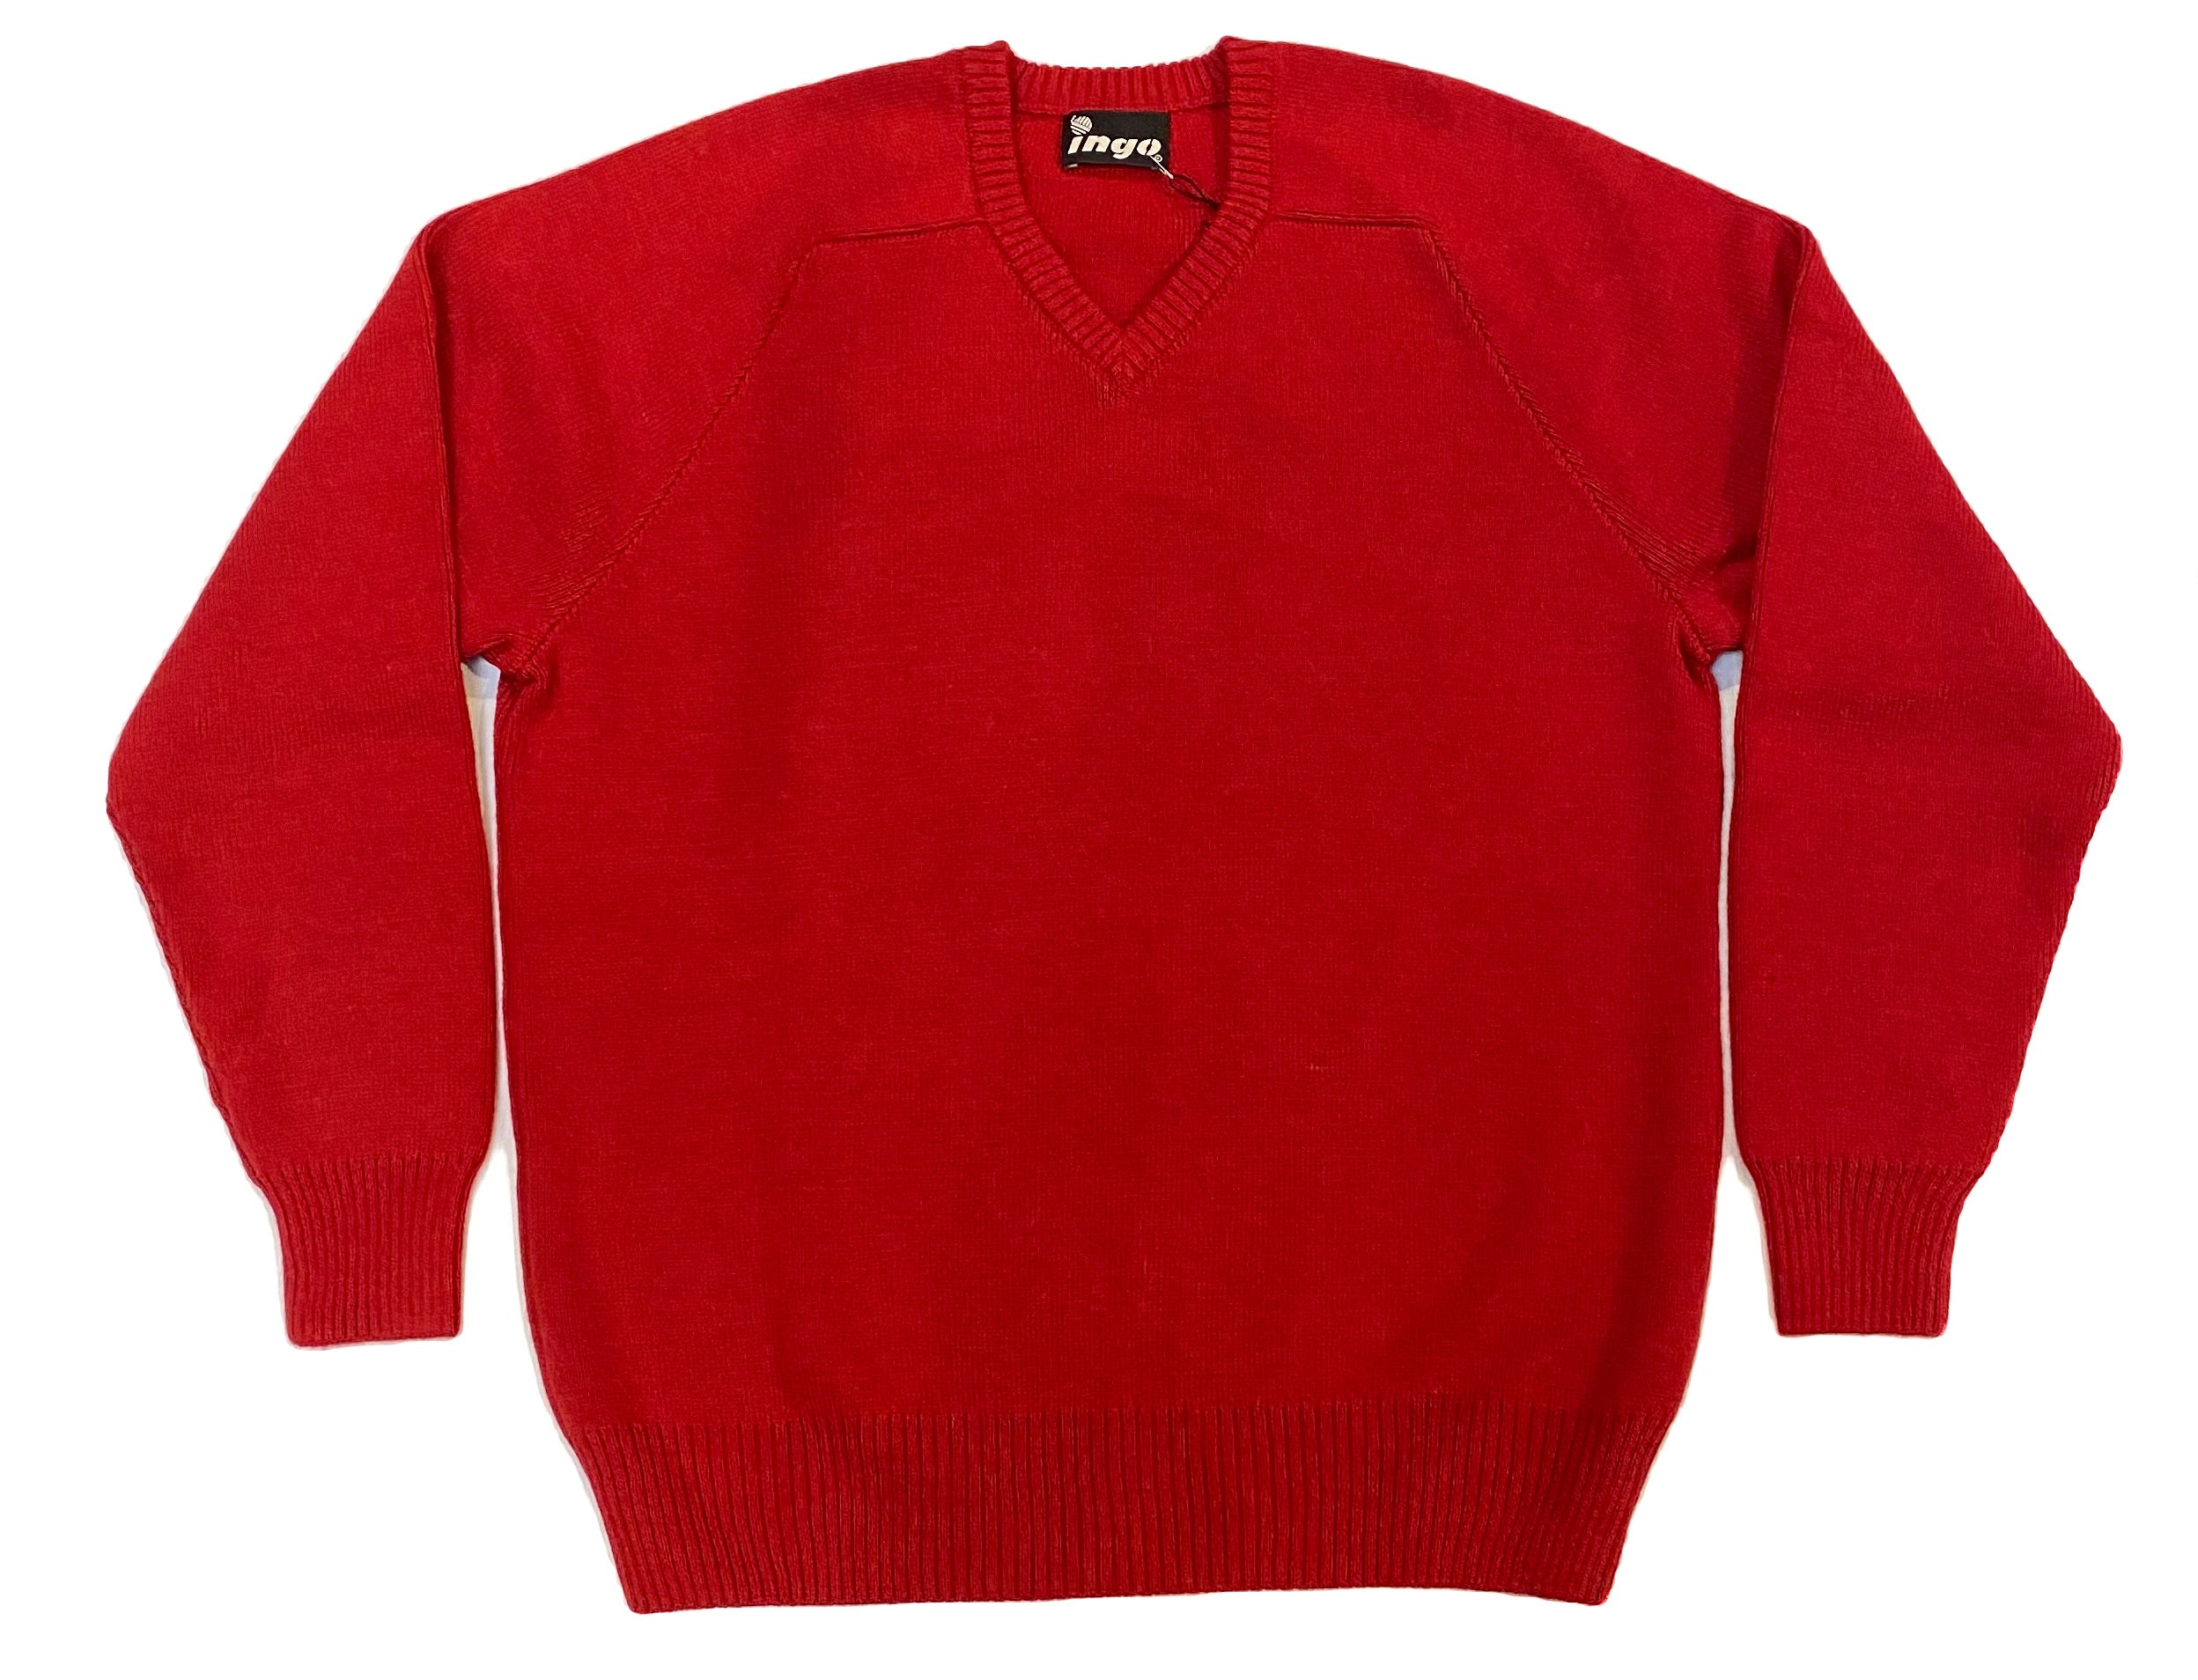 Ingo - Cuno V-Neck Sweater in Cherry.